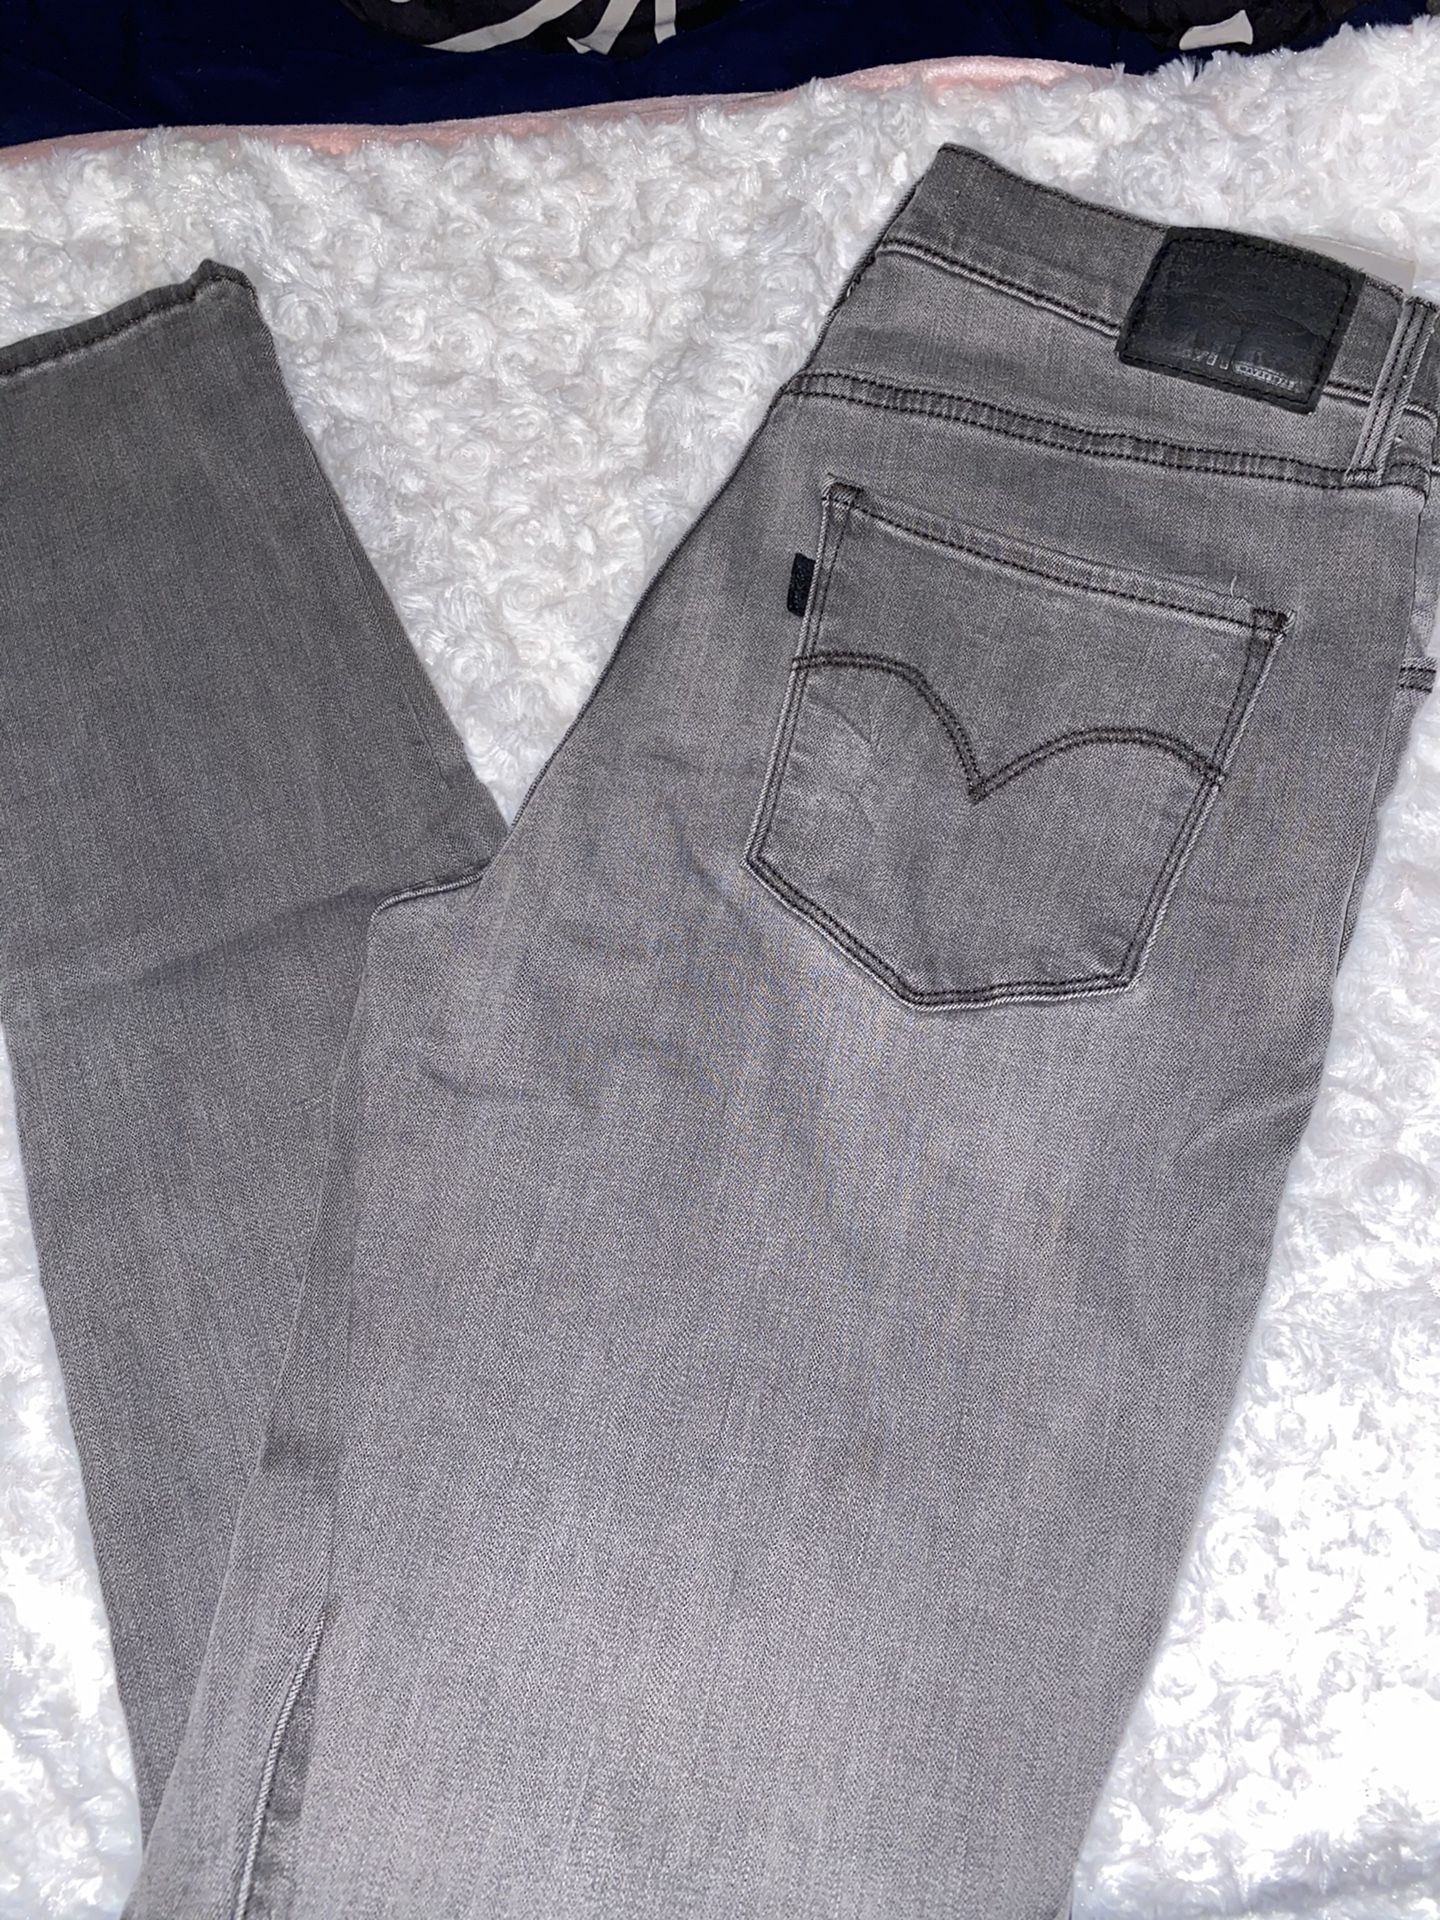 Women’s Levi jeans